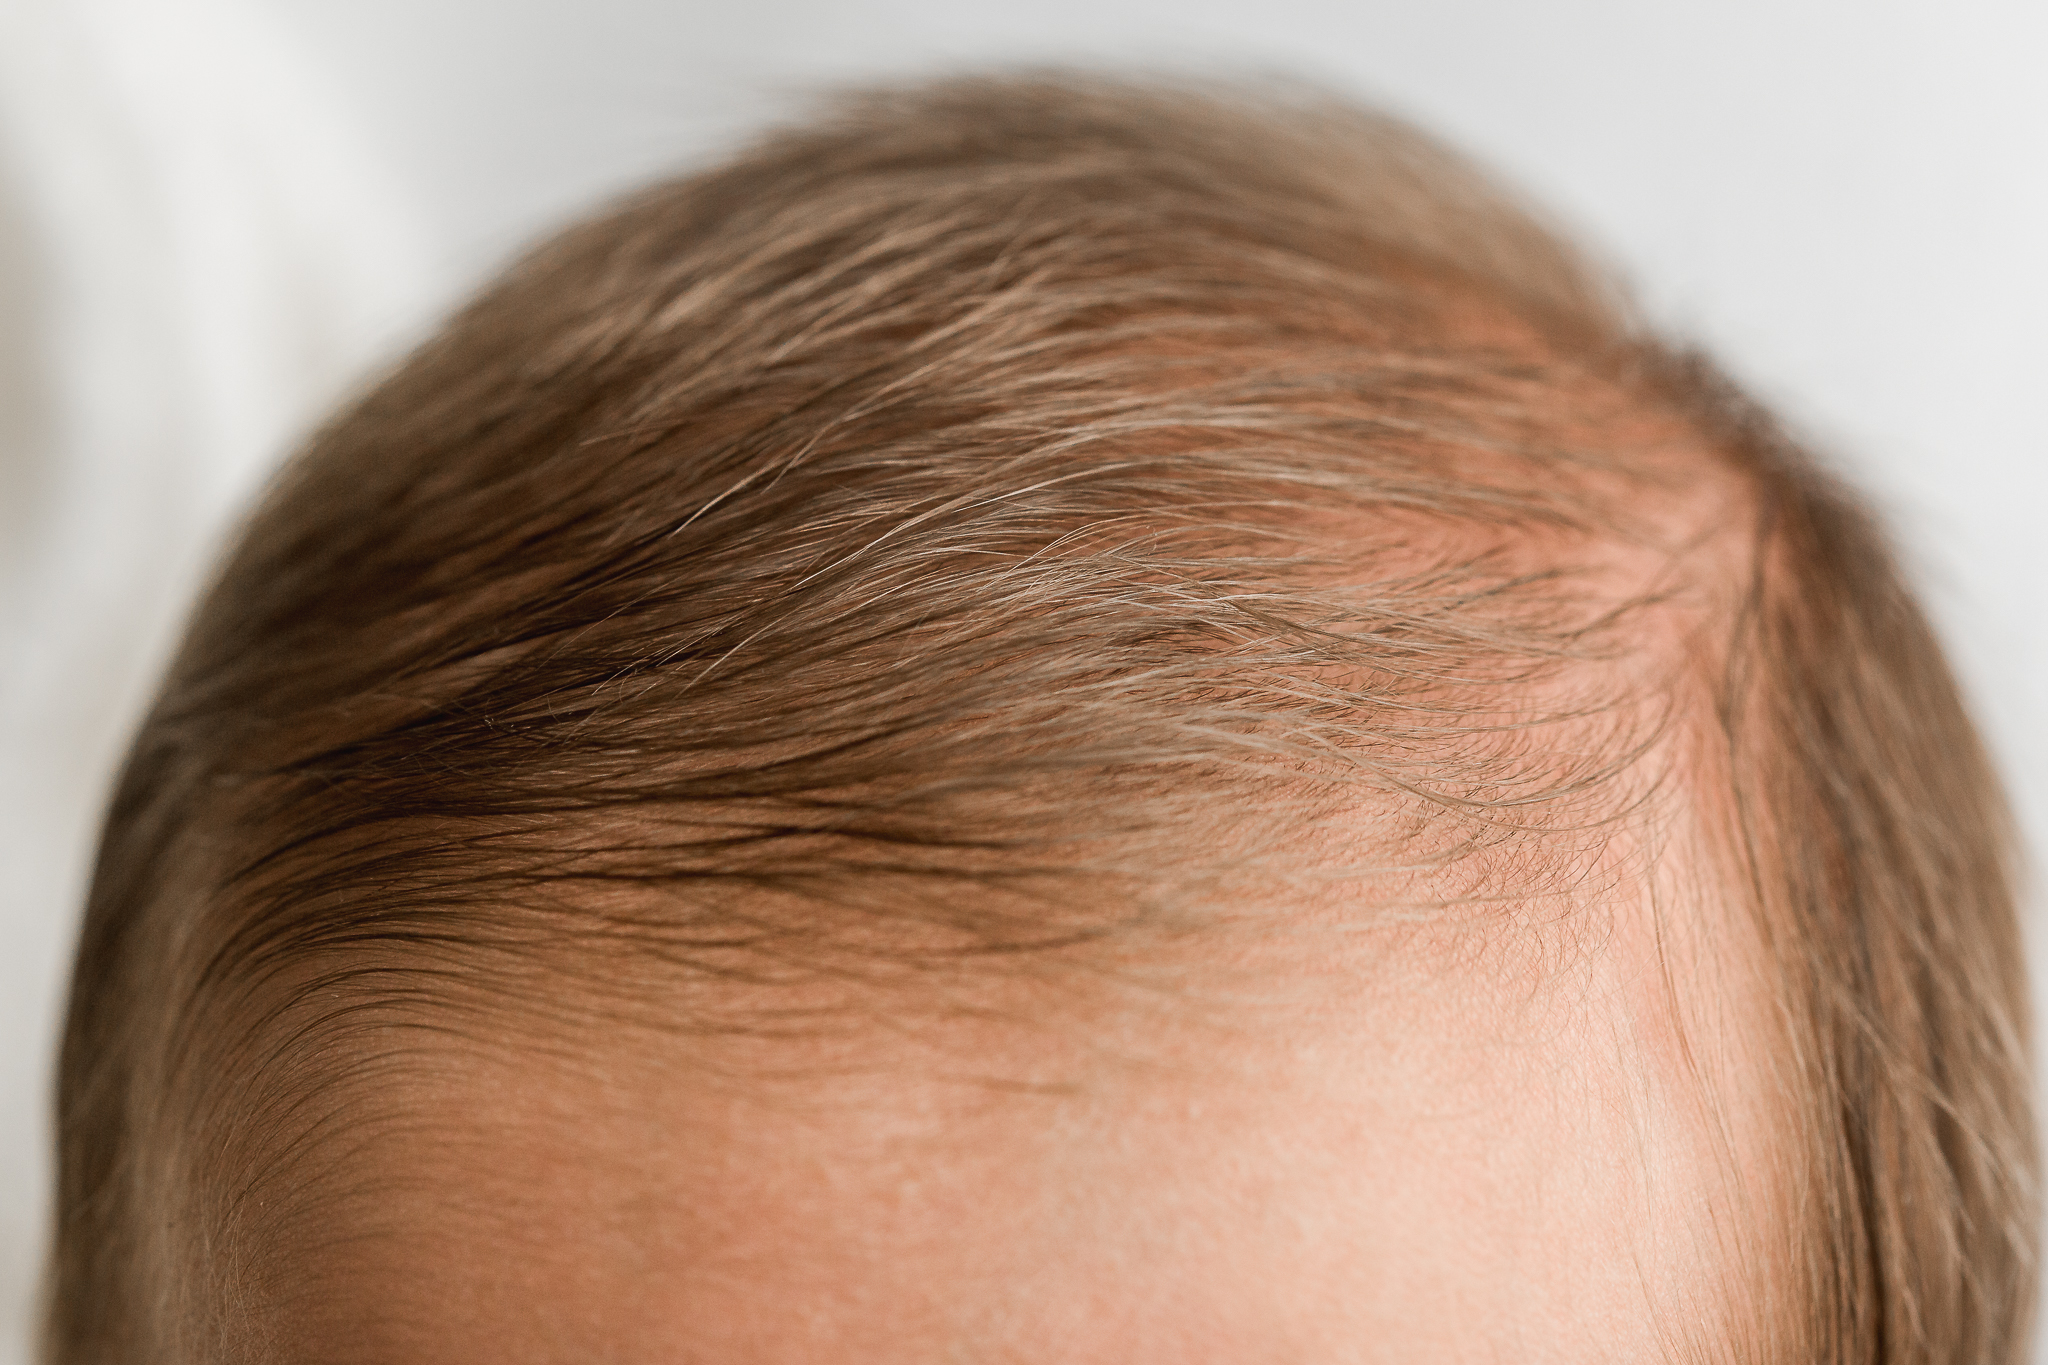 Newborn Baby Hair Image Central Ohio